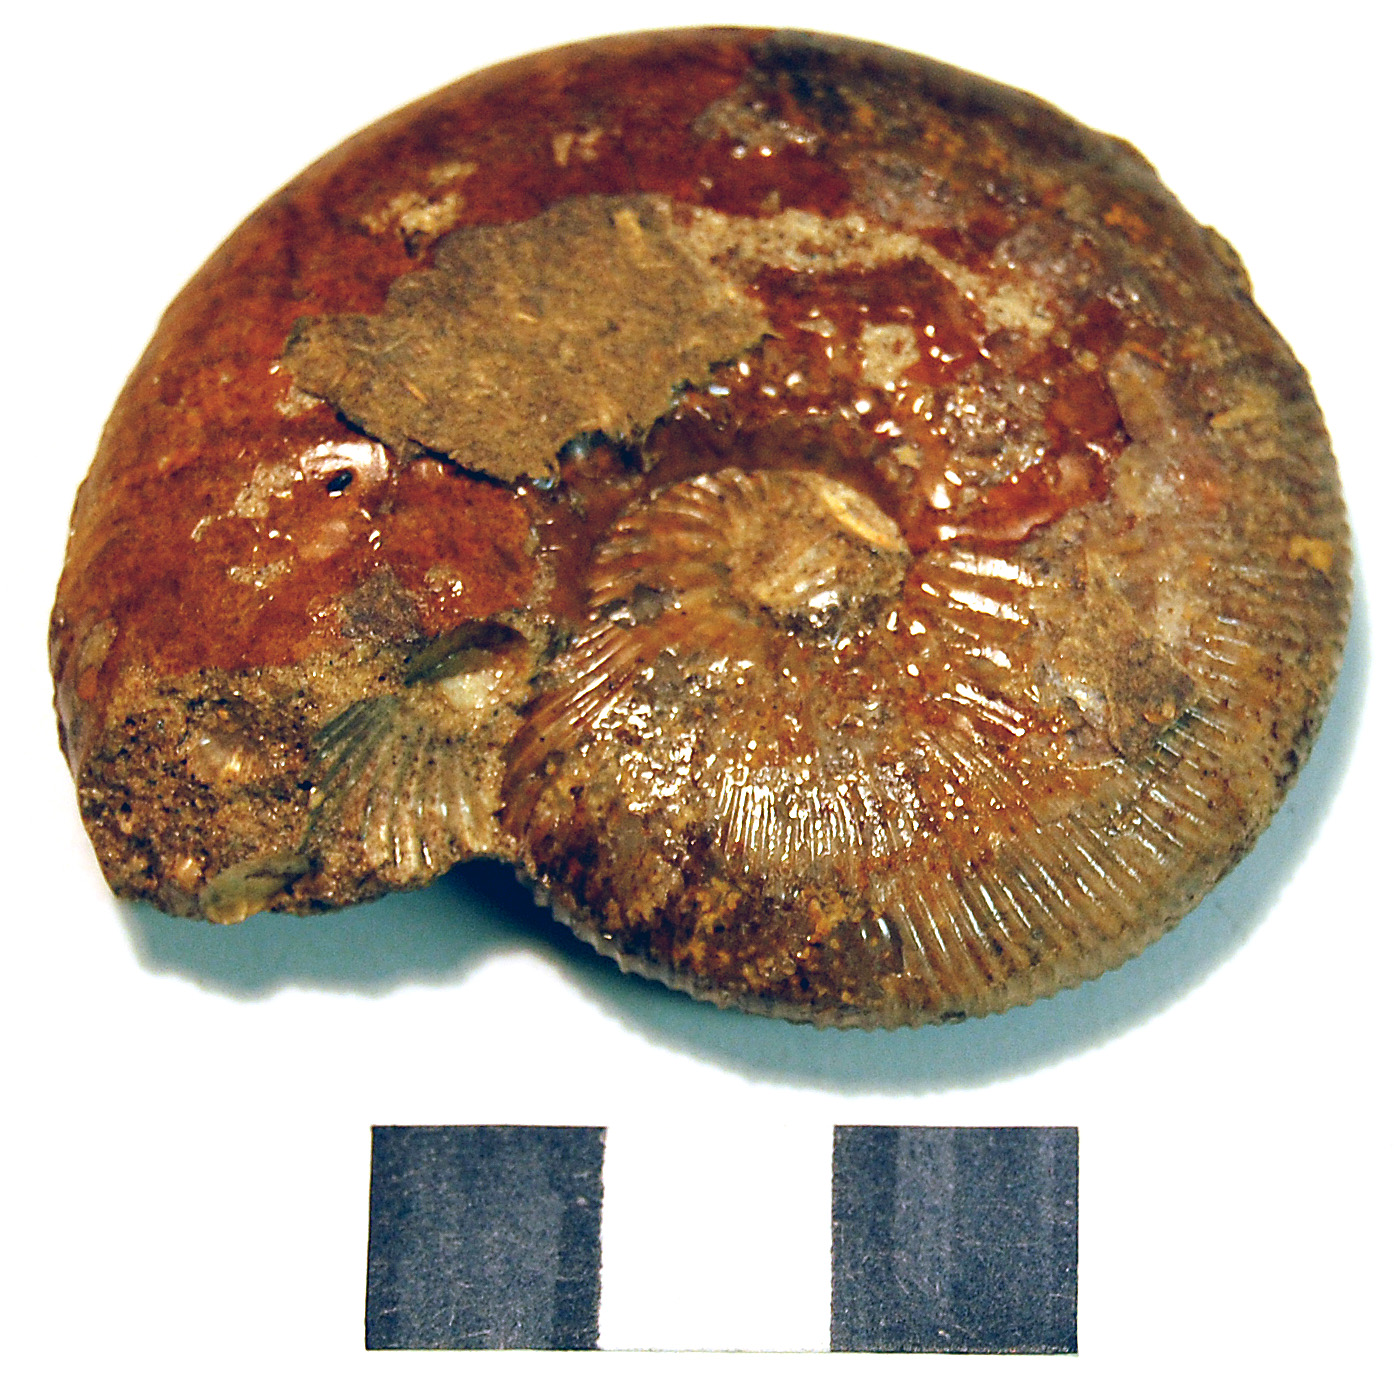 Photograph of ammounite: Catasigaloceras planicerclus